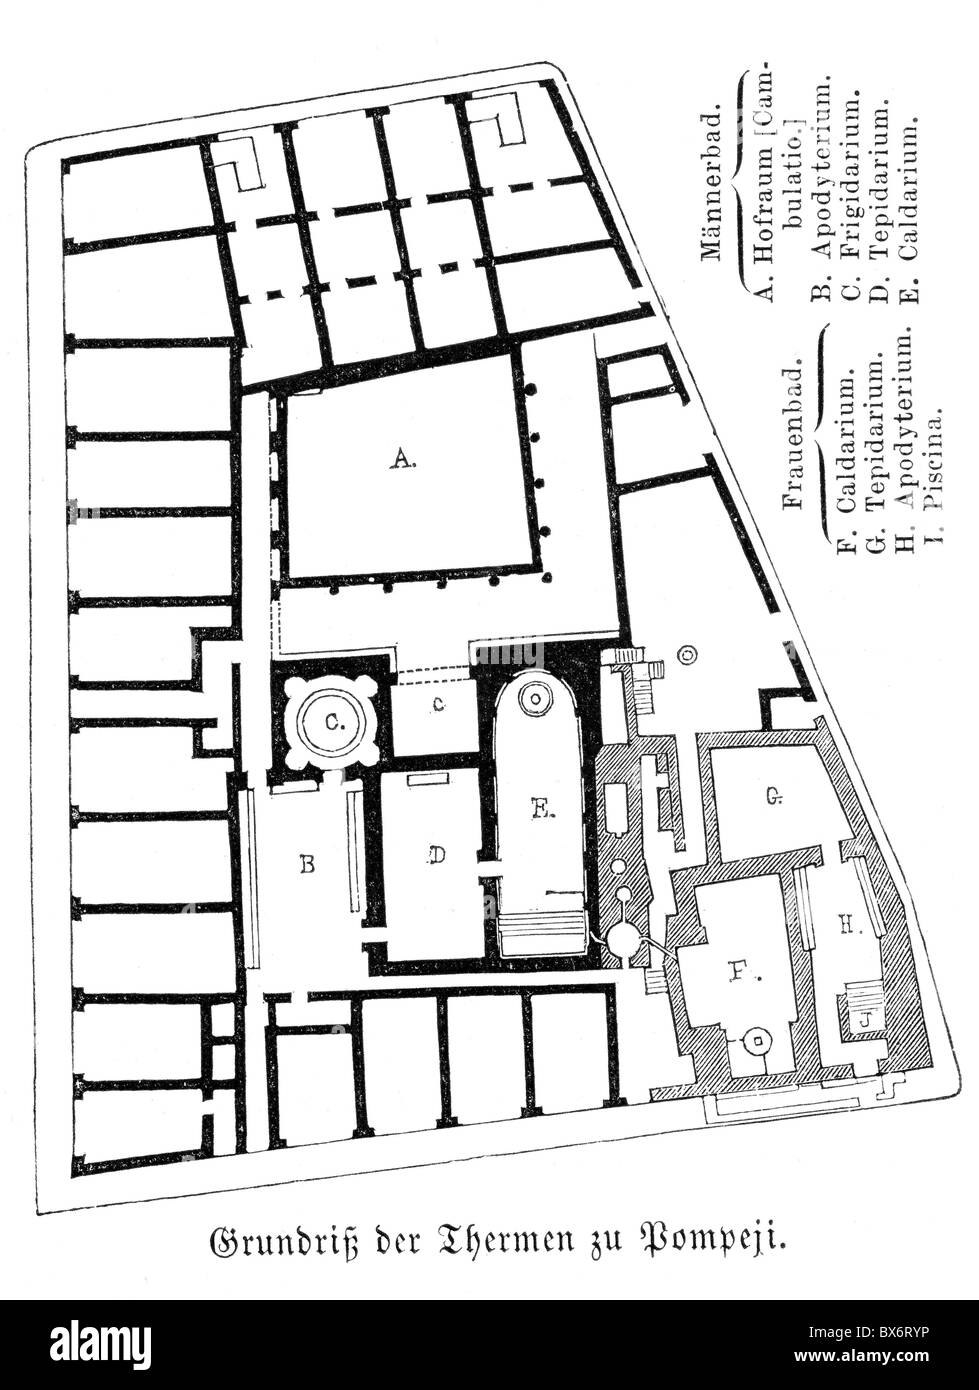 Architecture Floor Plans Thermae In Pompeii 1st Century Stock